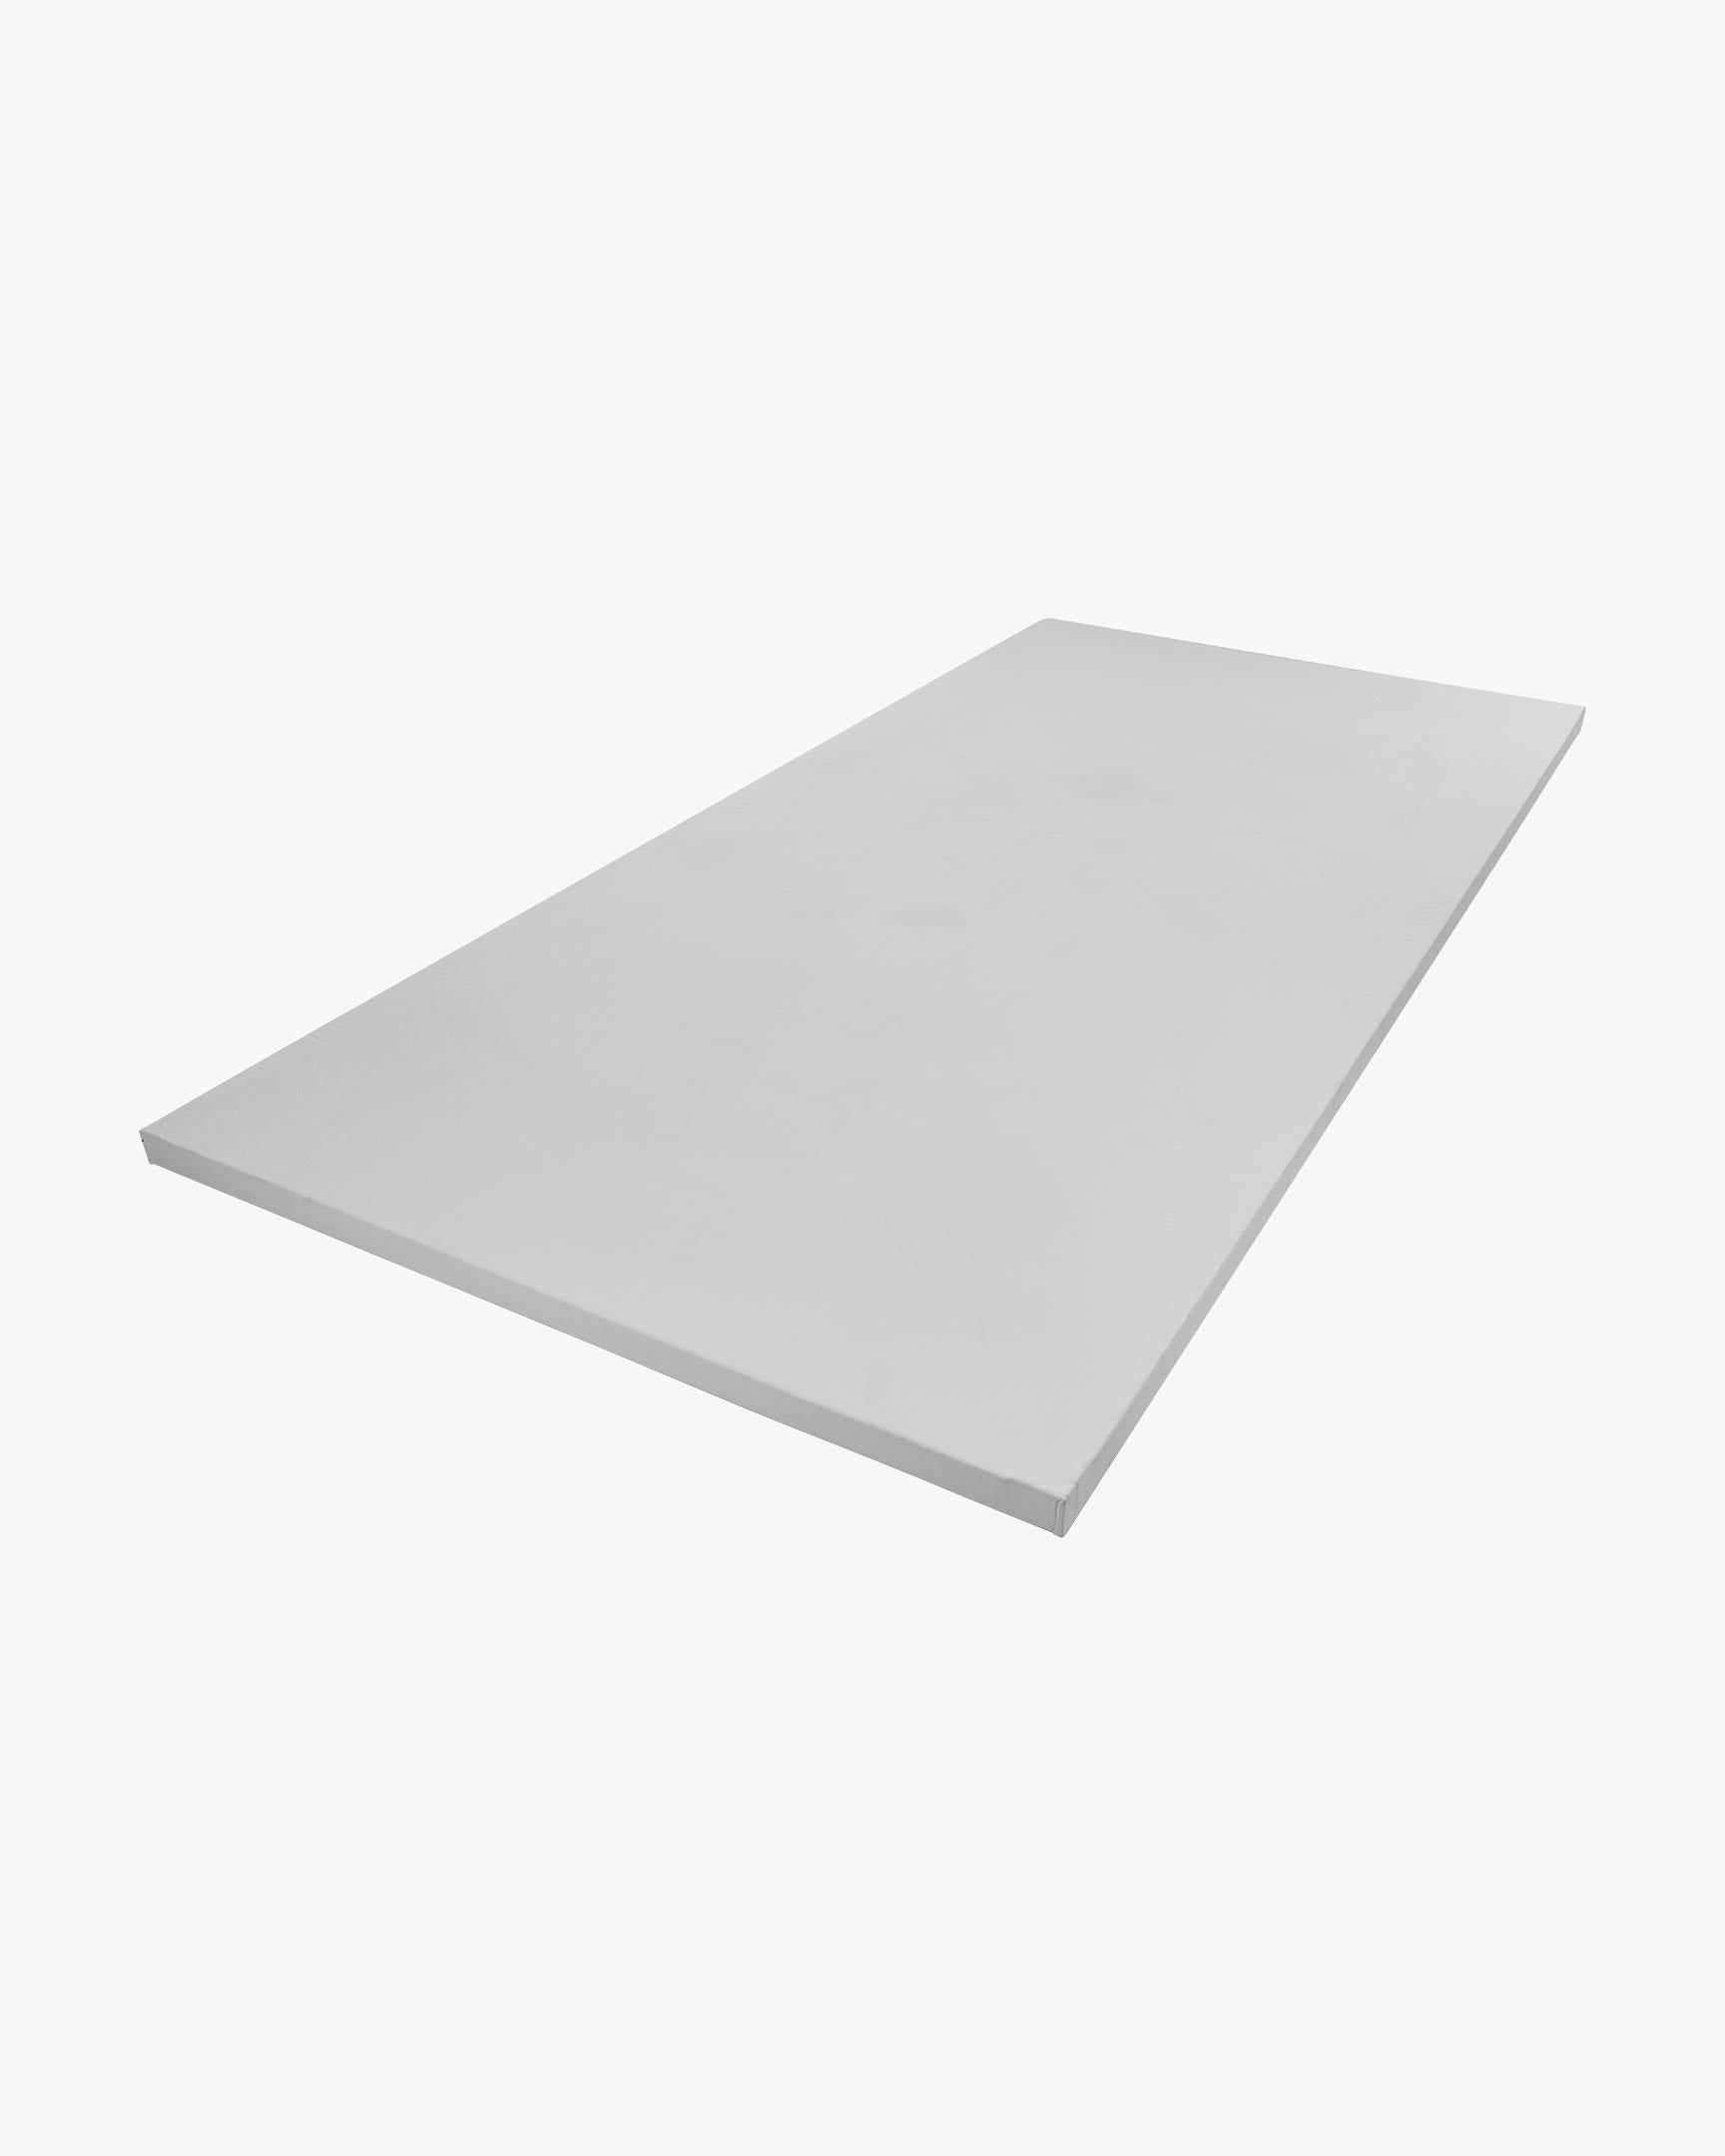 Smooth Tile Mat - 1m x 2m 1.5 Inch